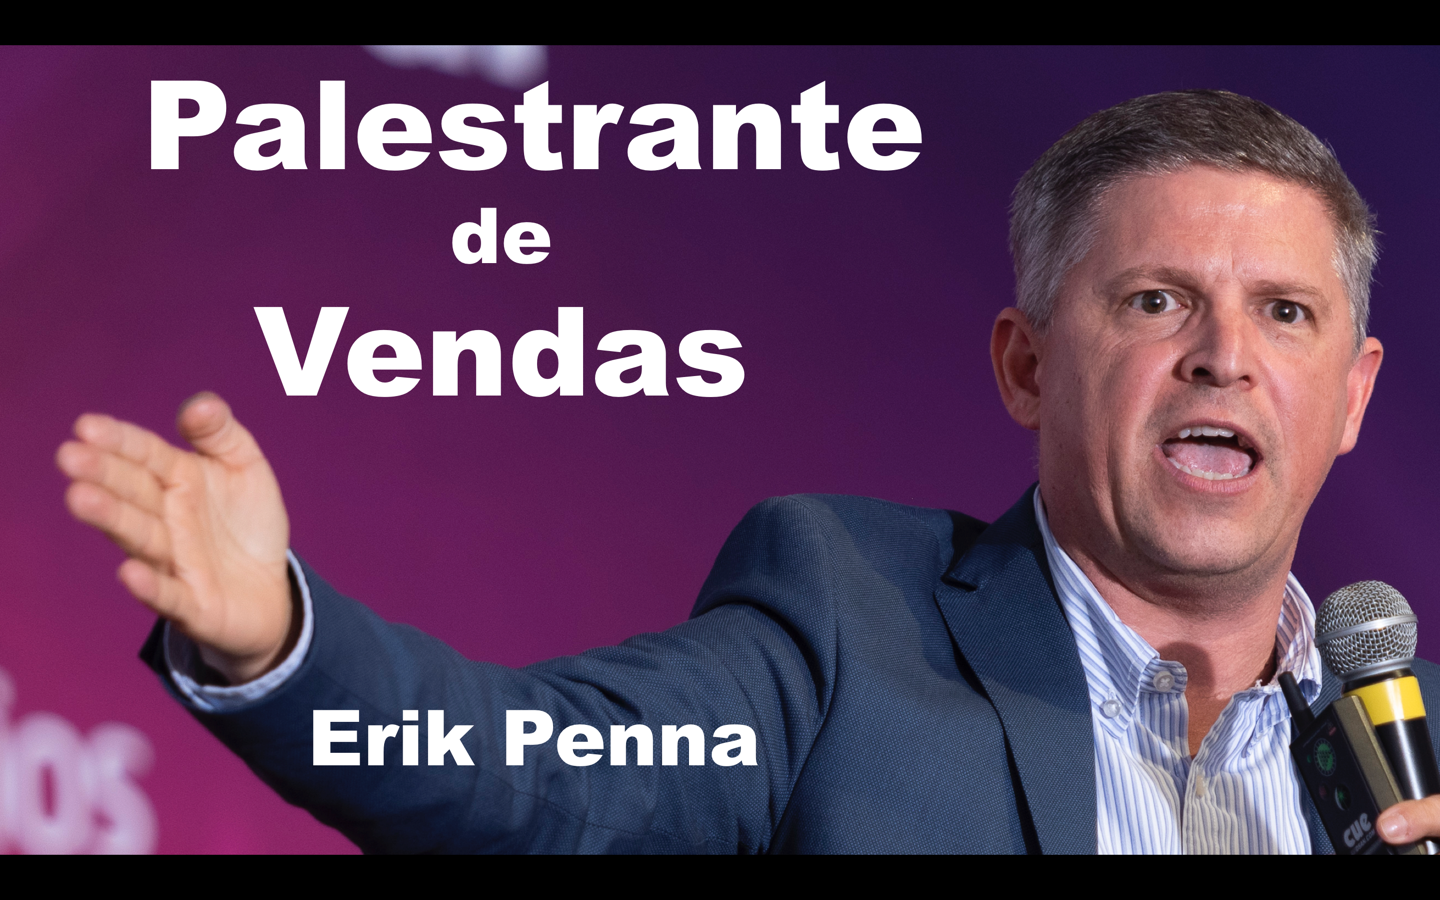 Palestrante de Vendas Erik Penna